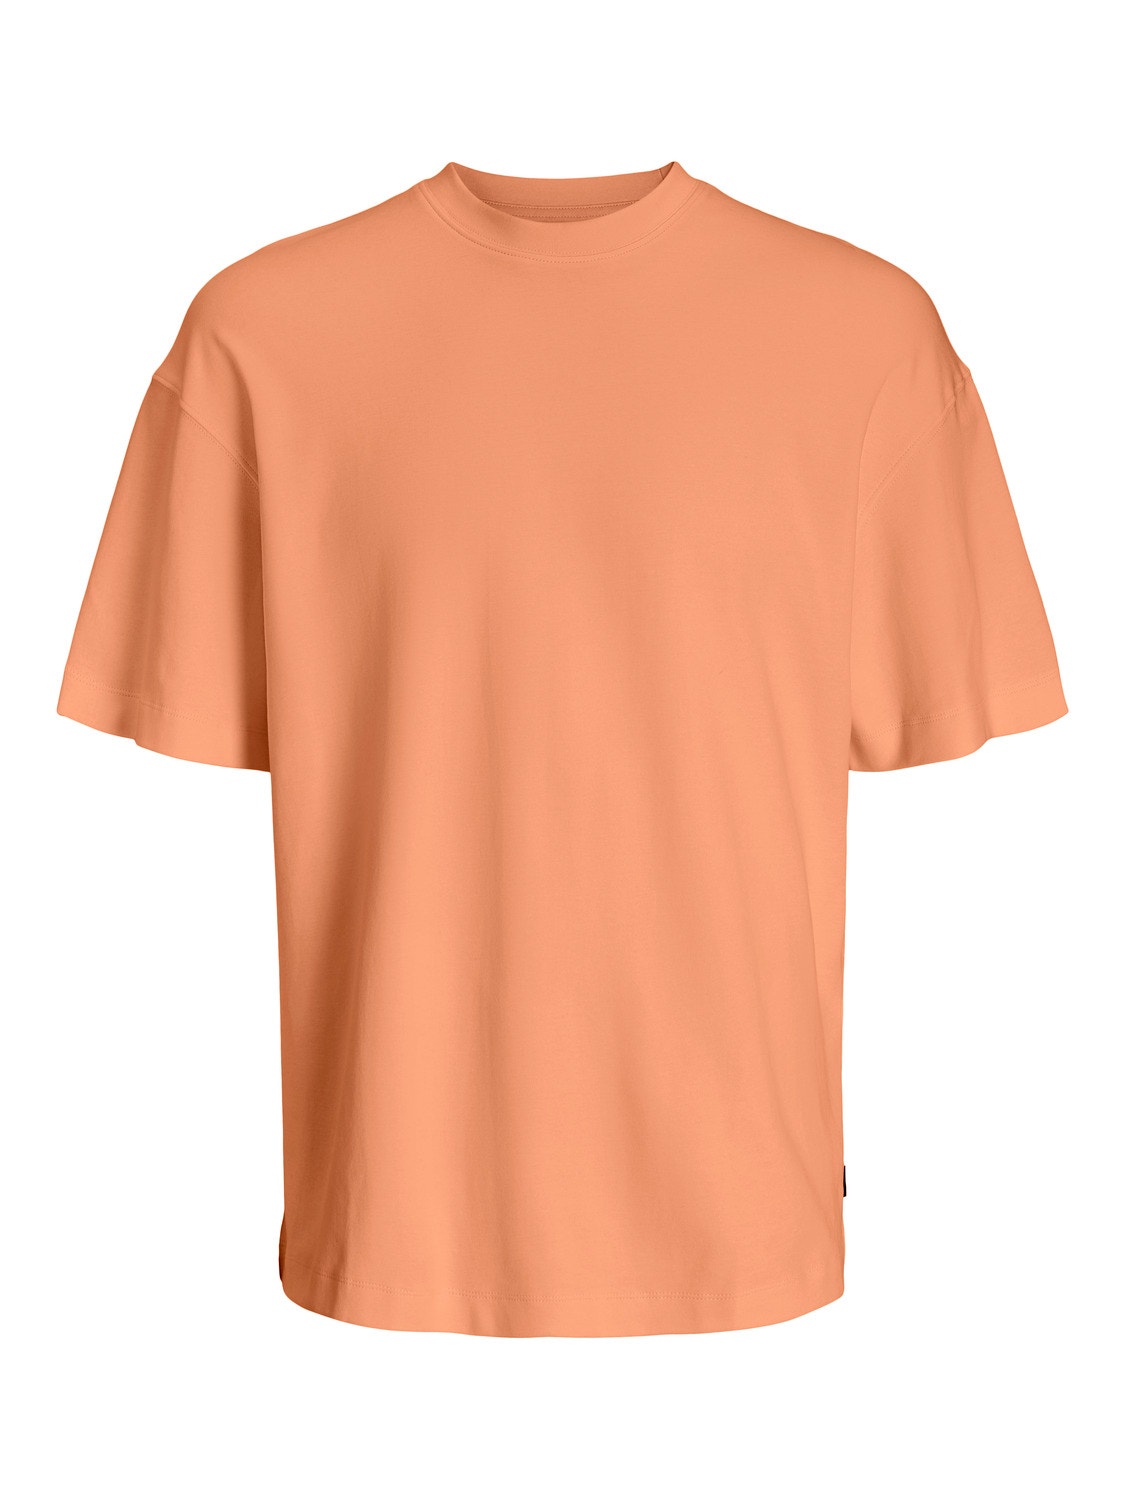 Fashion High Quality Plain Round Neck - Orange